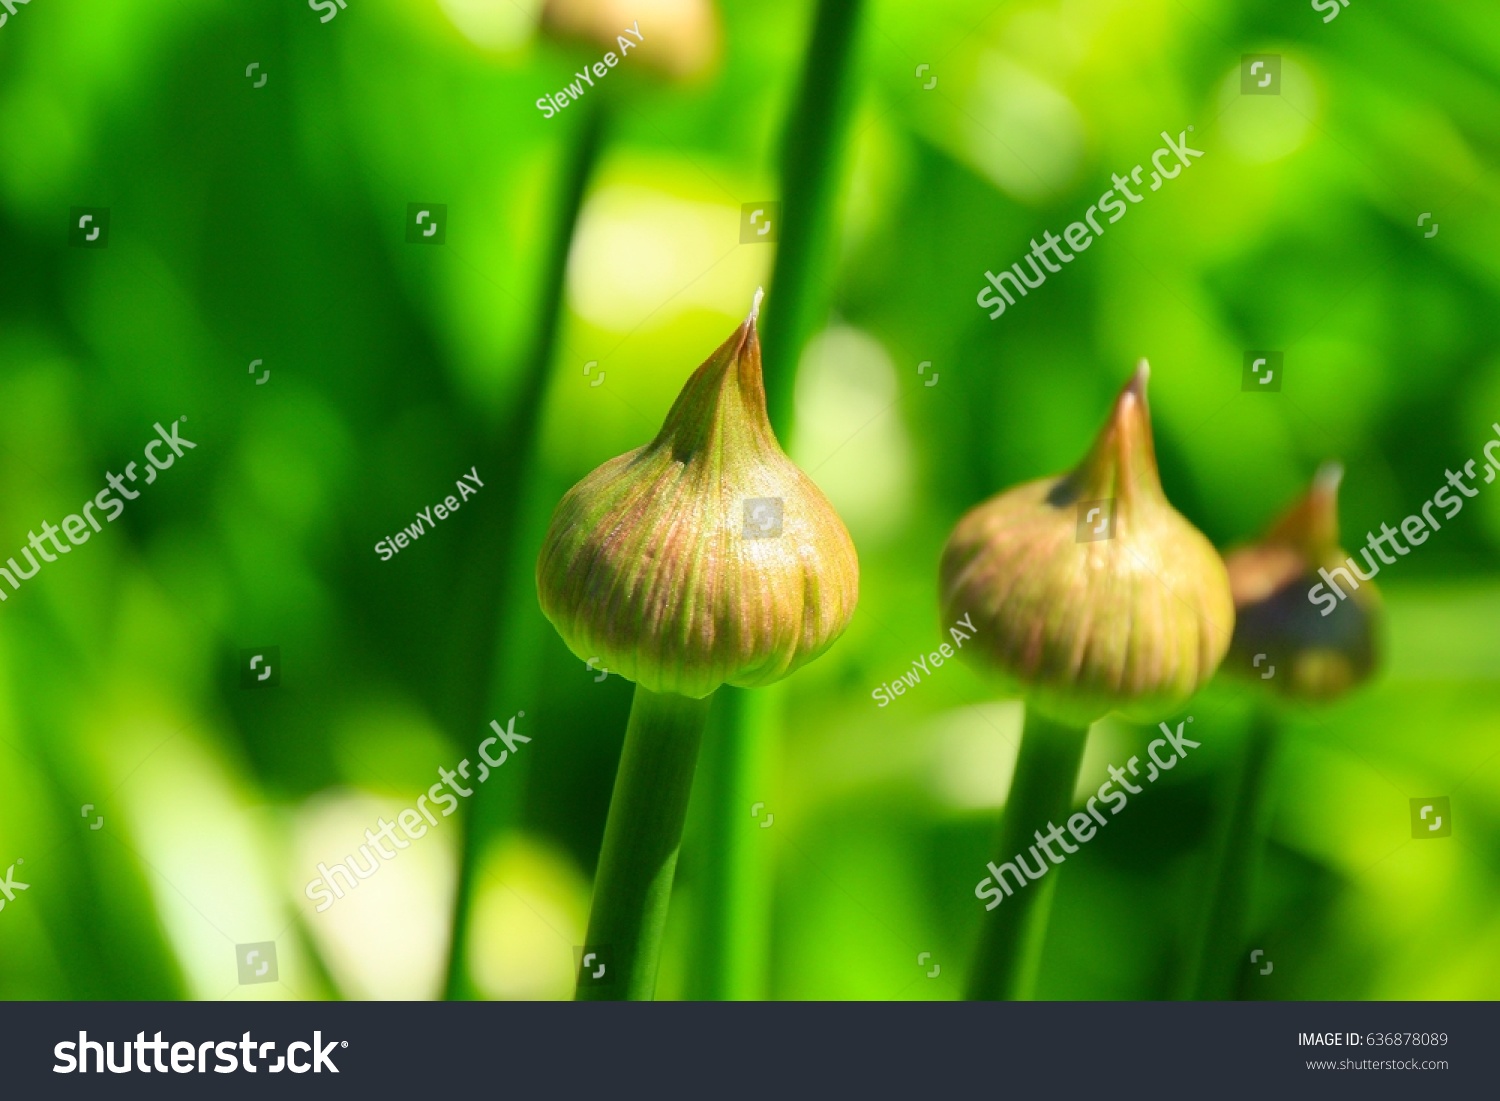 Allium Flower Buds Nature Stock Image 636878089